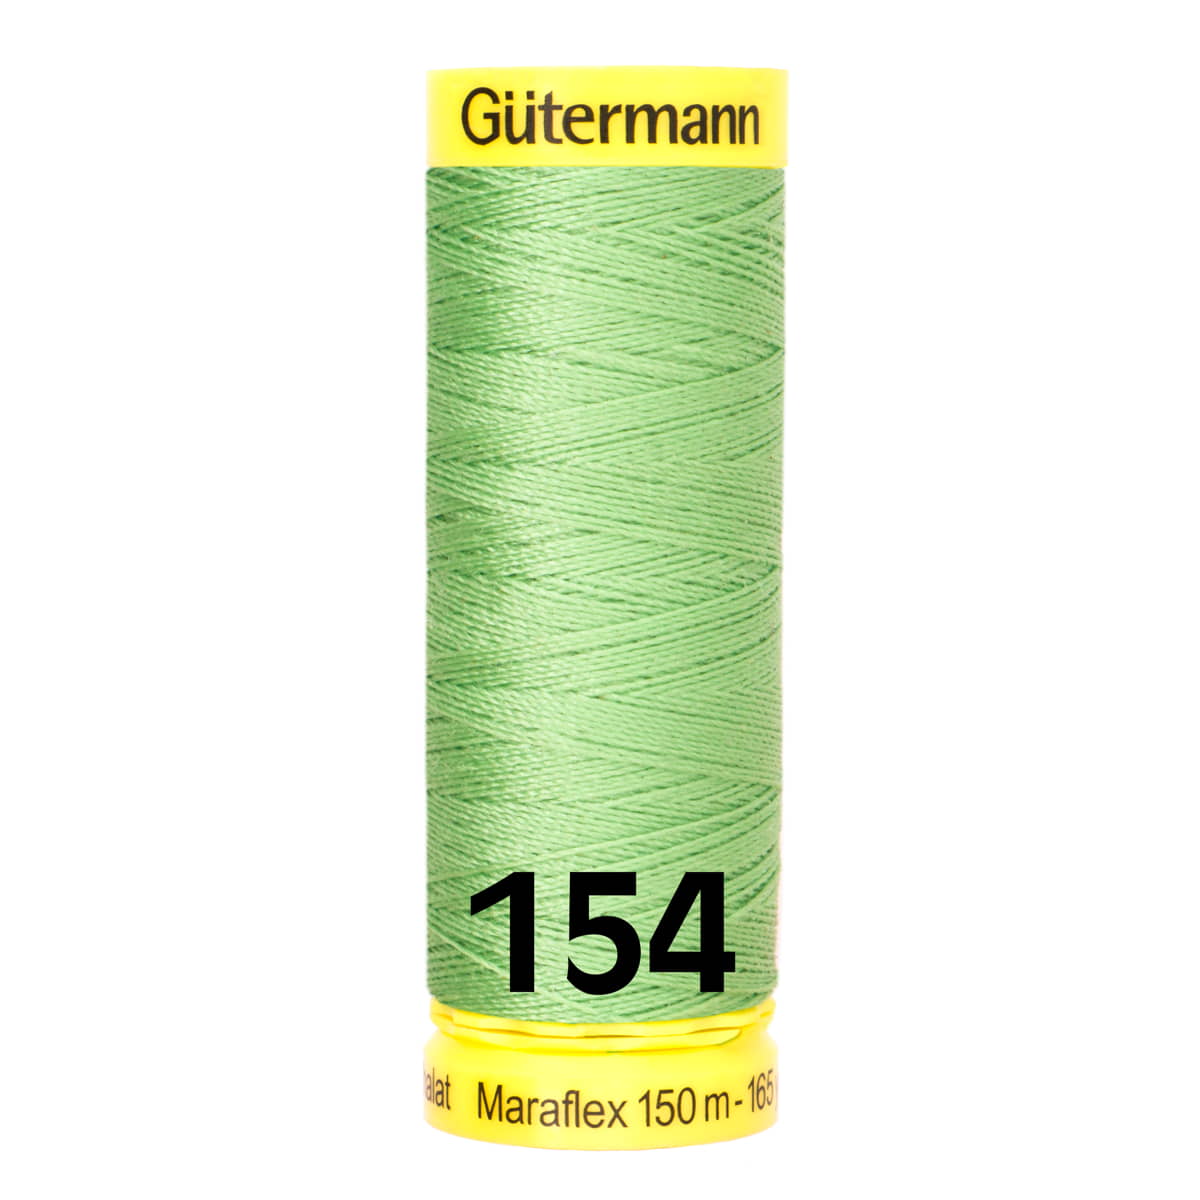 Gütermann MaraFlex 150m - 154 groen GUTERMANN-MARAFLEX-150-154 4029394999062 - Fourniturenkraam.nl